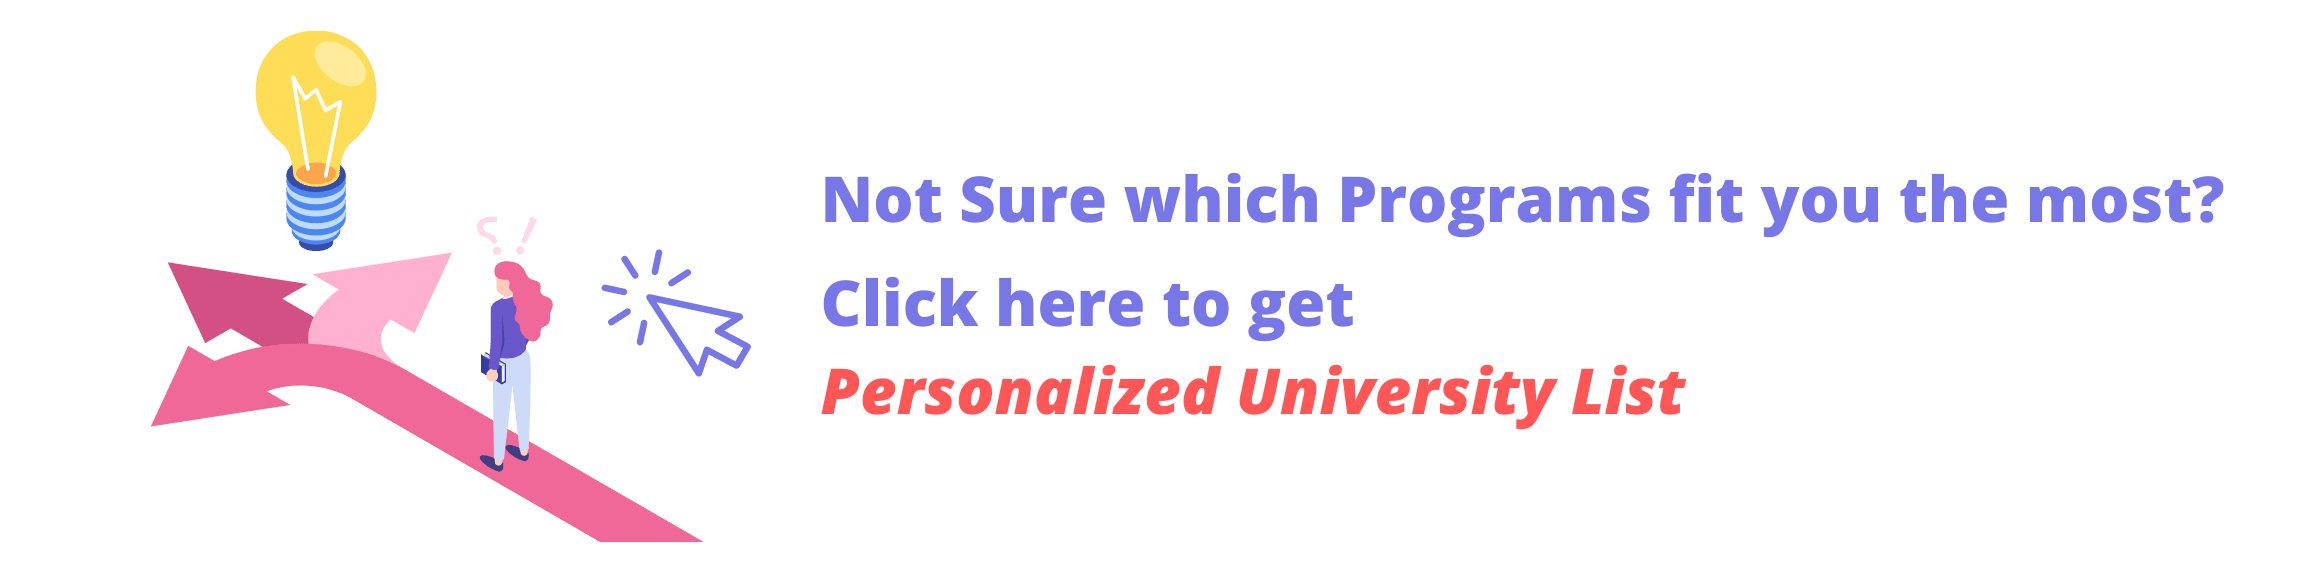 Personalized University List